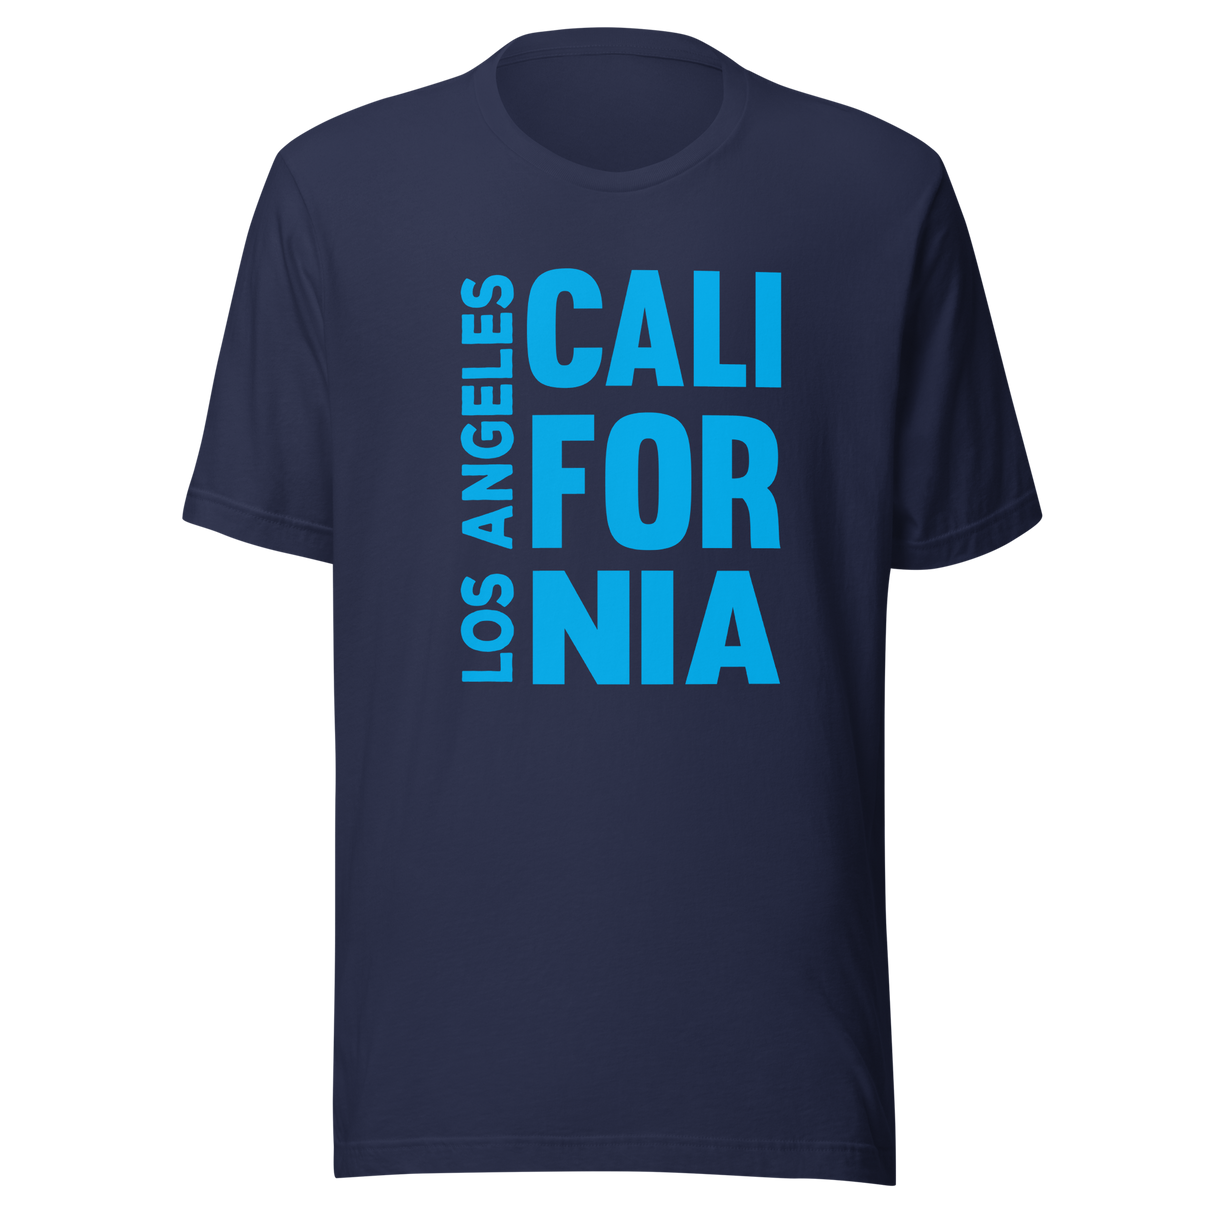 los-angeles-california-loa-angeles-tee-california-t-shirt-west-coast-tee-t-shirt-tee#color_navy